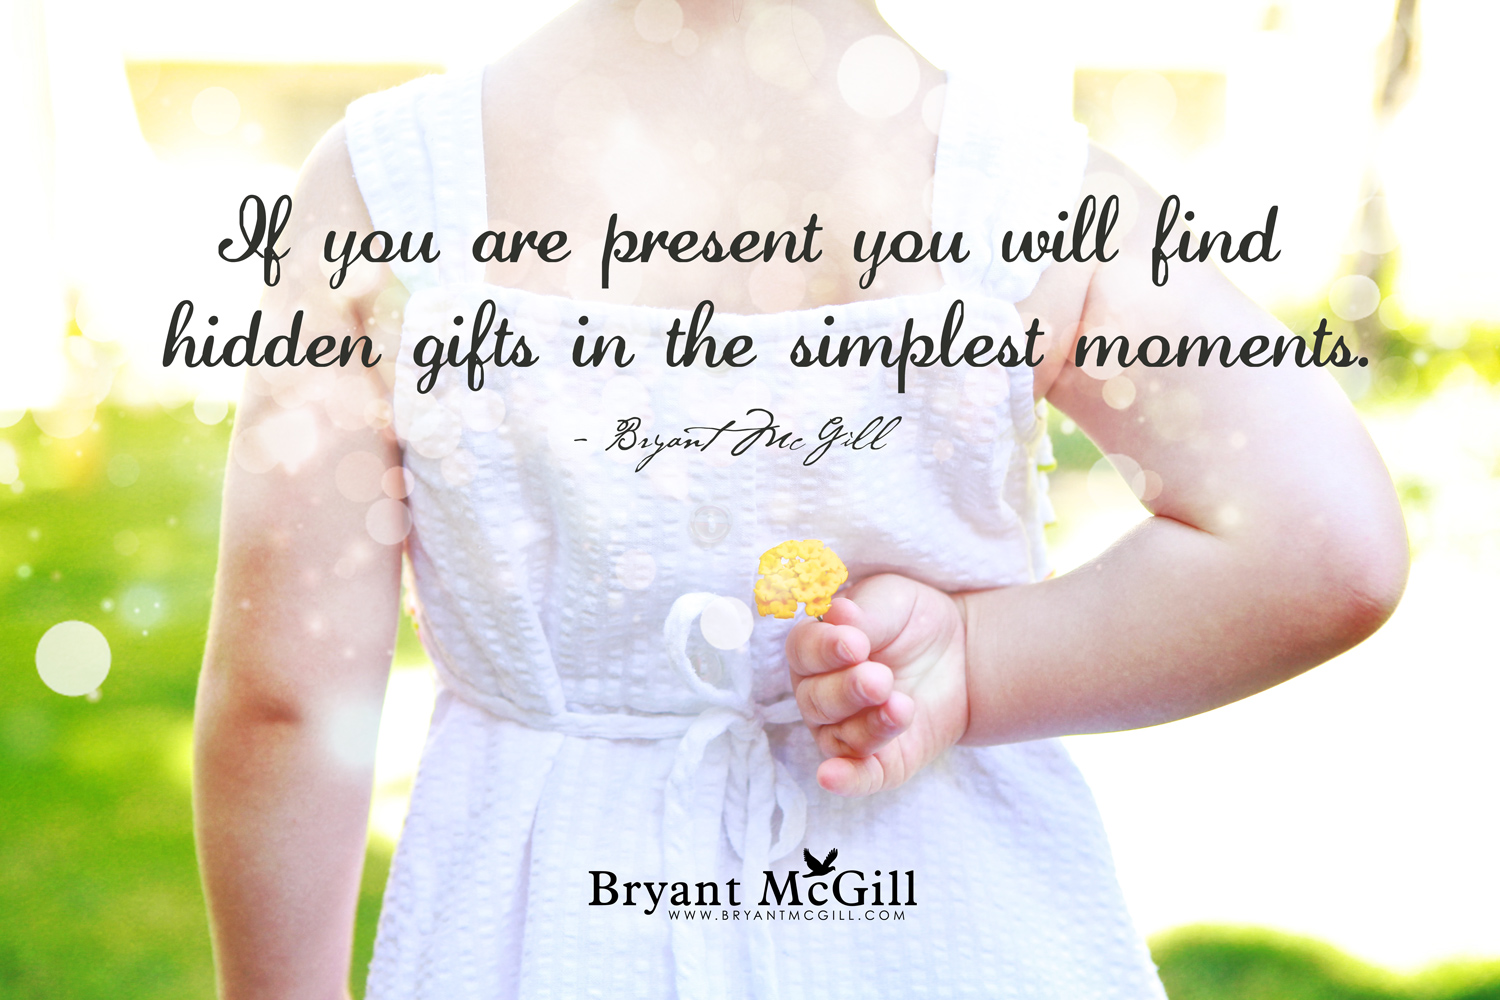 bryant-mcgill-present-hidden-gifts